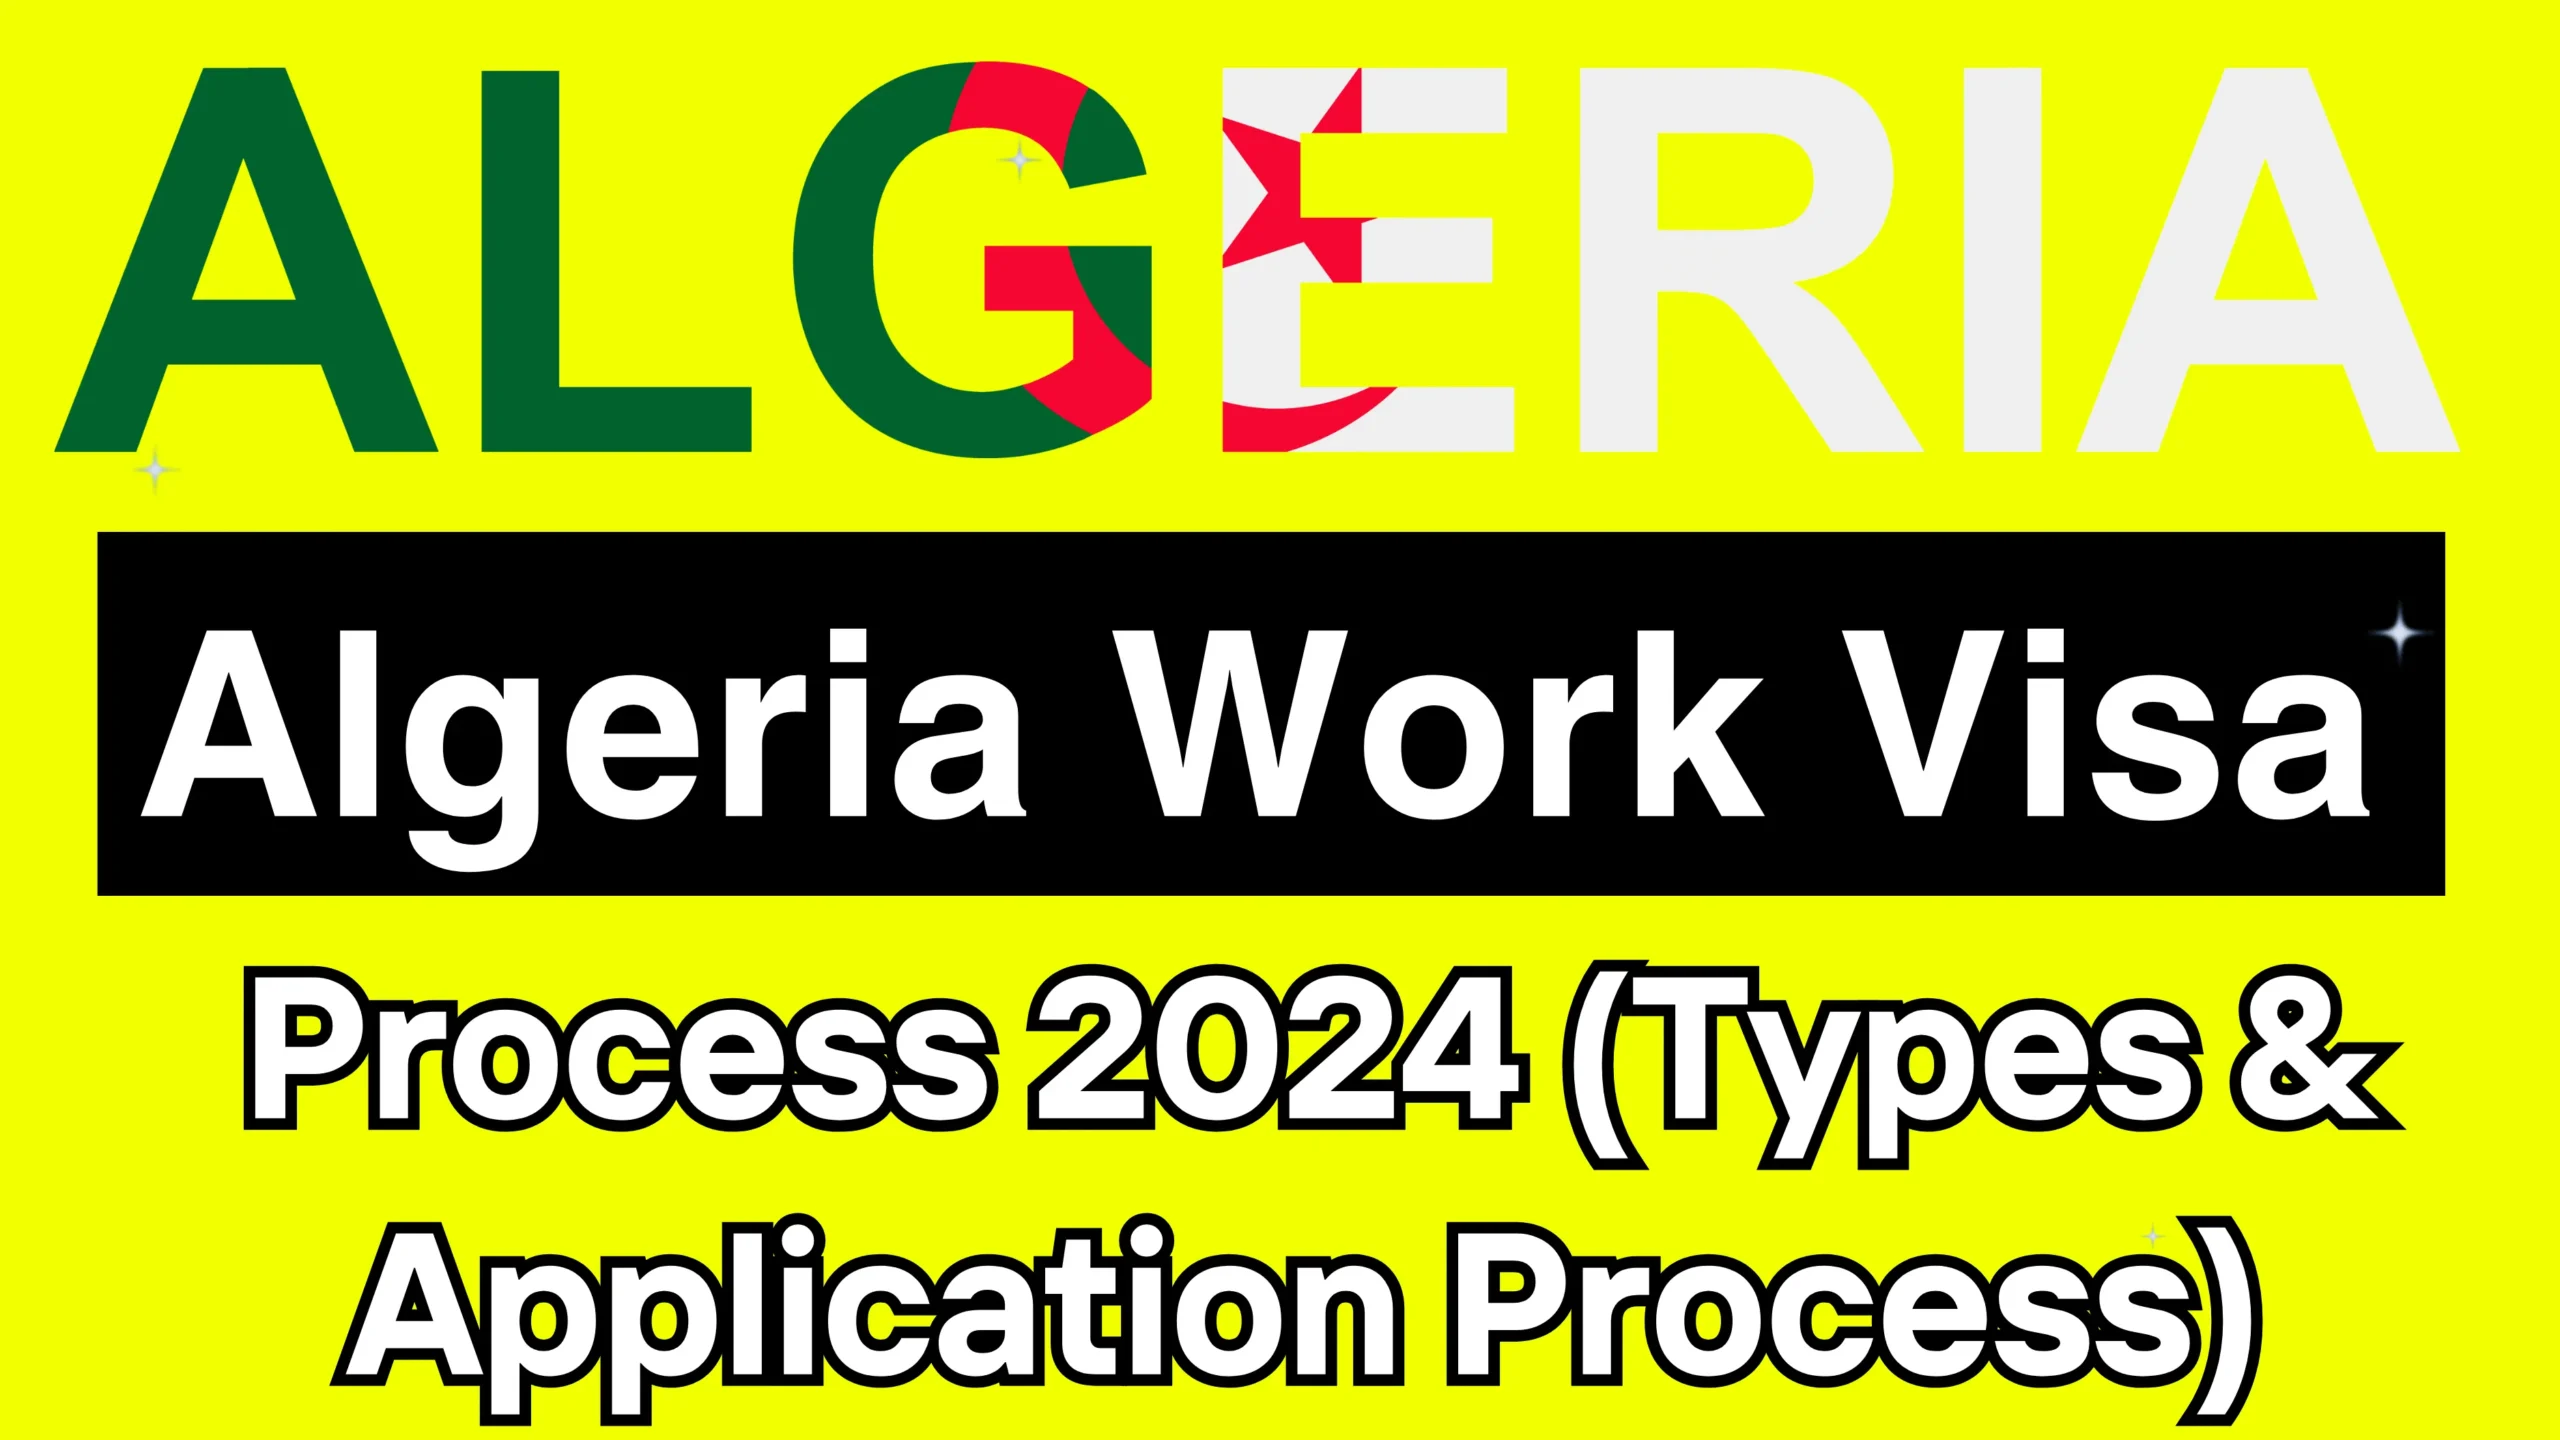 Algeria Work Visa Process 2024 (Types & Application Process)